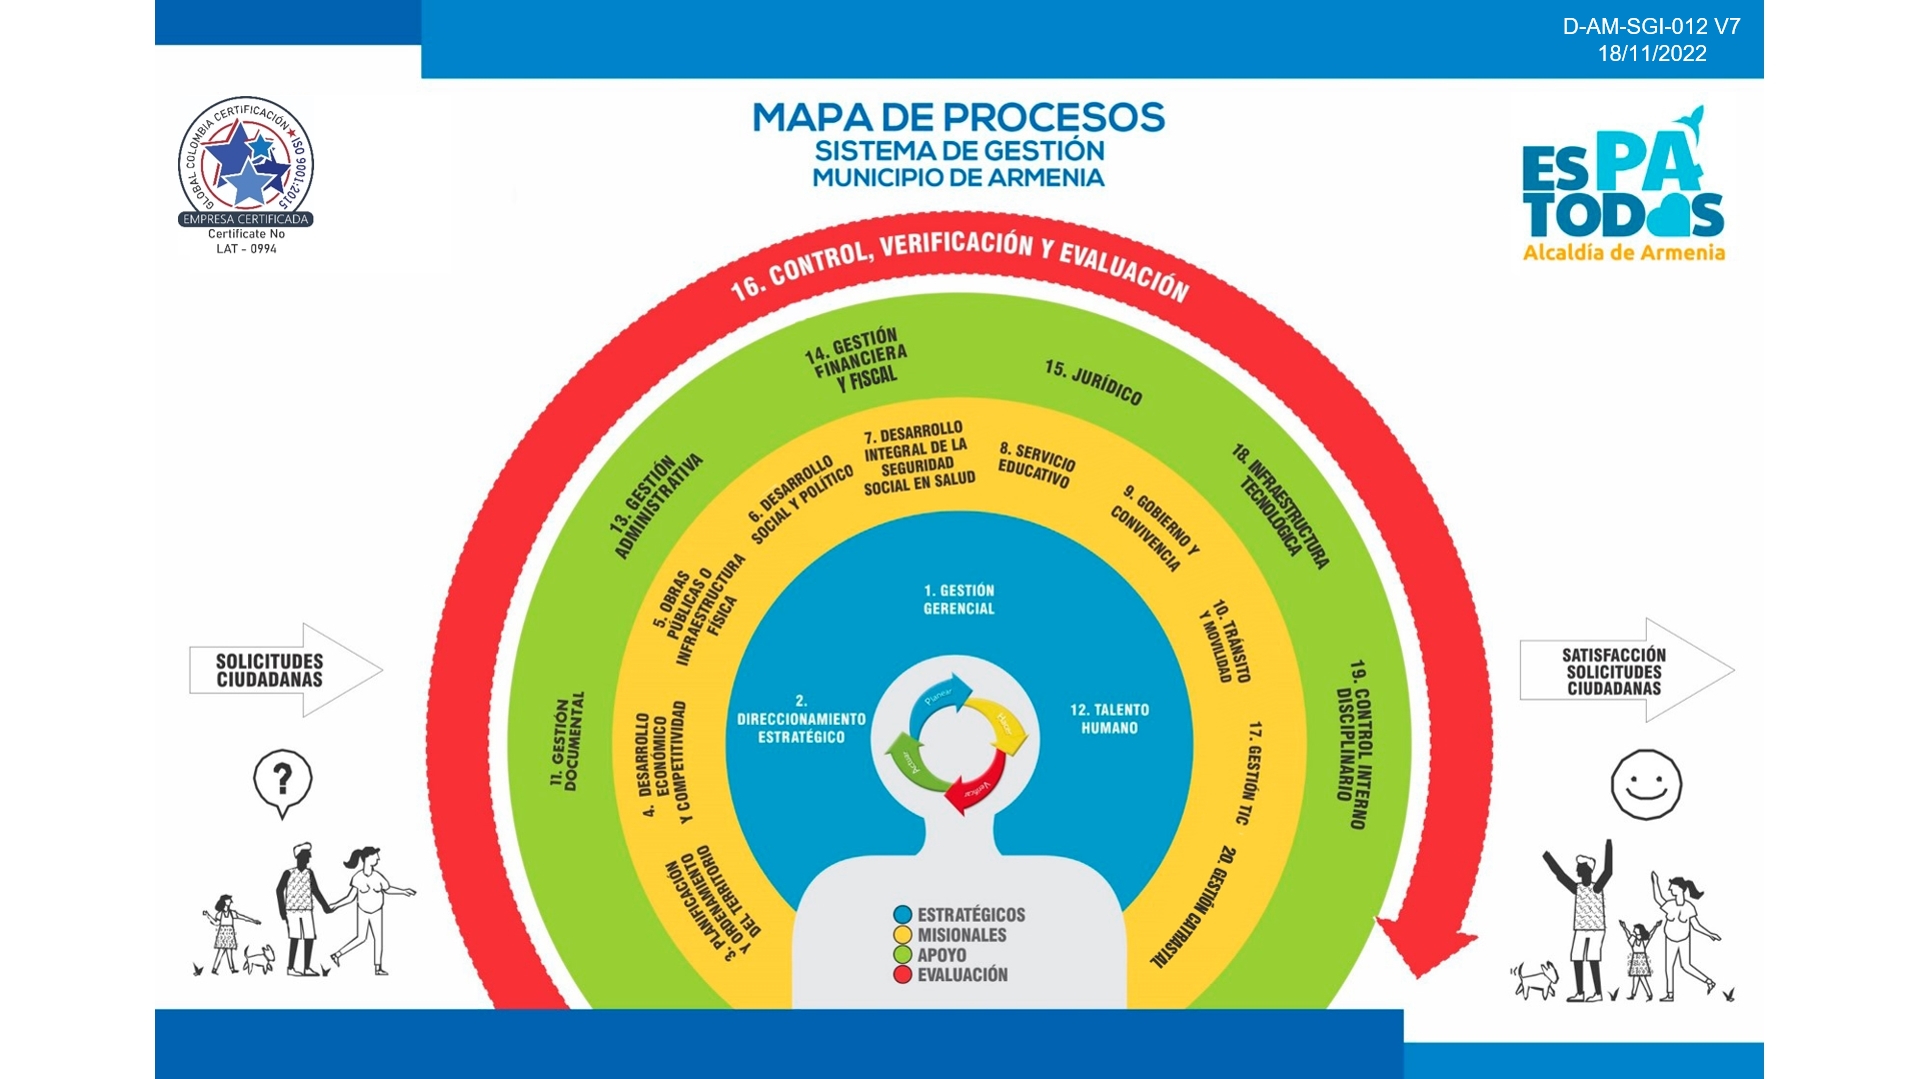 Mapa de procesos